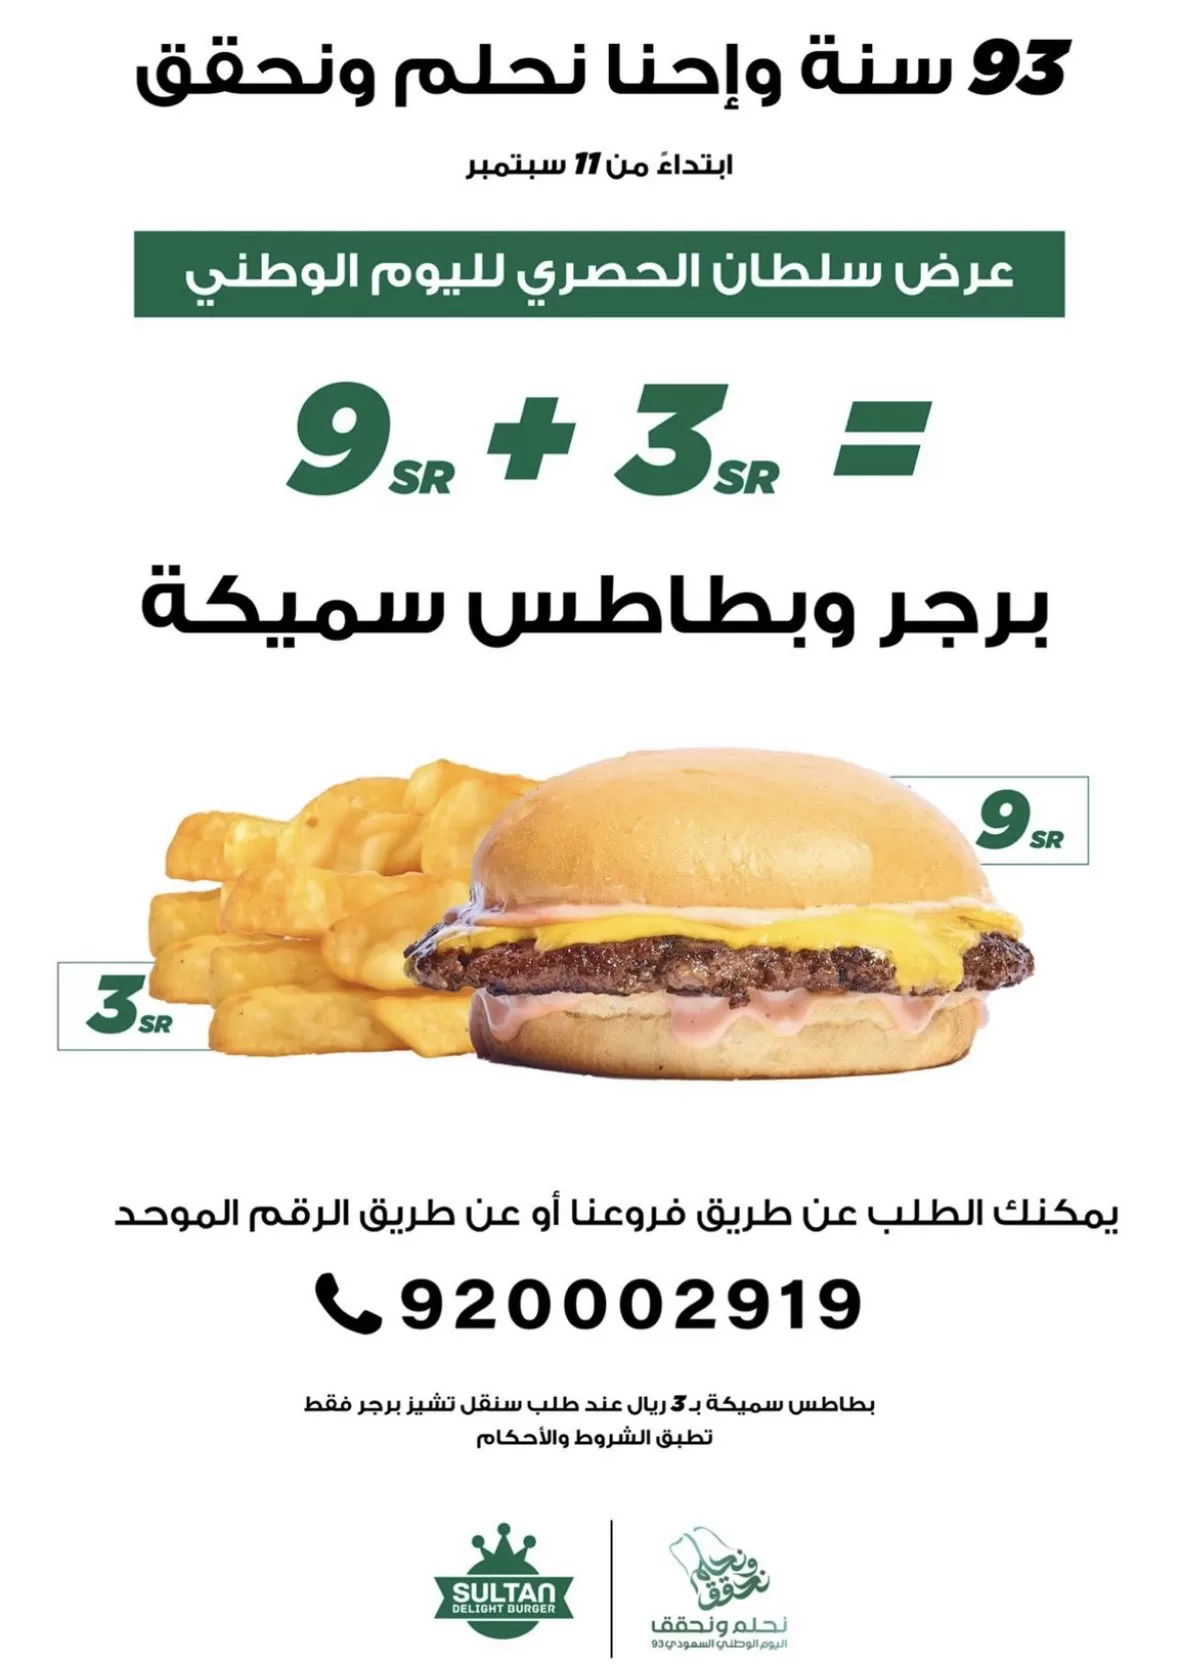 F51pUugW8AM3WHV jpg - عروض مطاعم جدة في اليوم الوطني السعودي 93 صفحة واحدة | محدث يومياَ